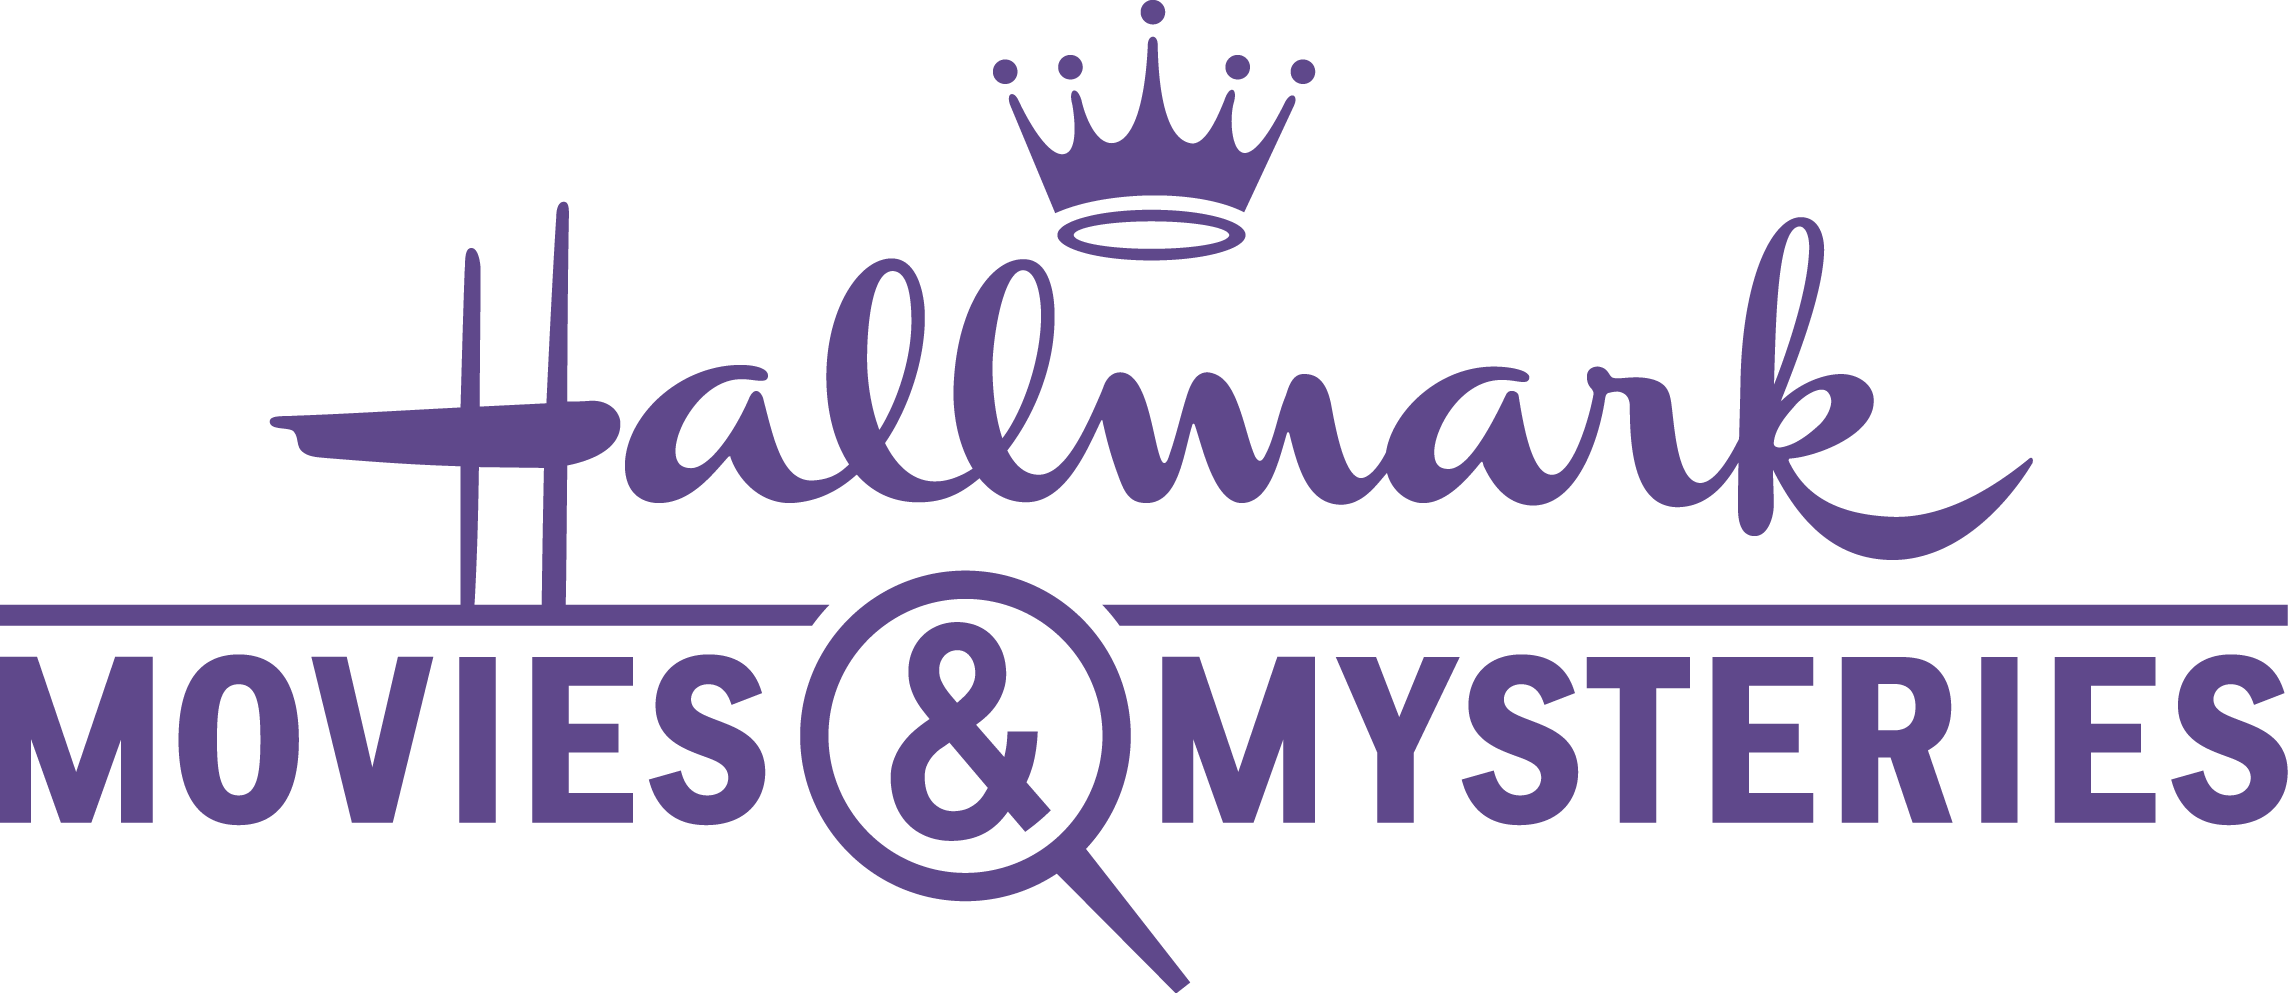 Hallmark Channel Logo - Crown Media